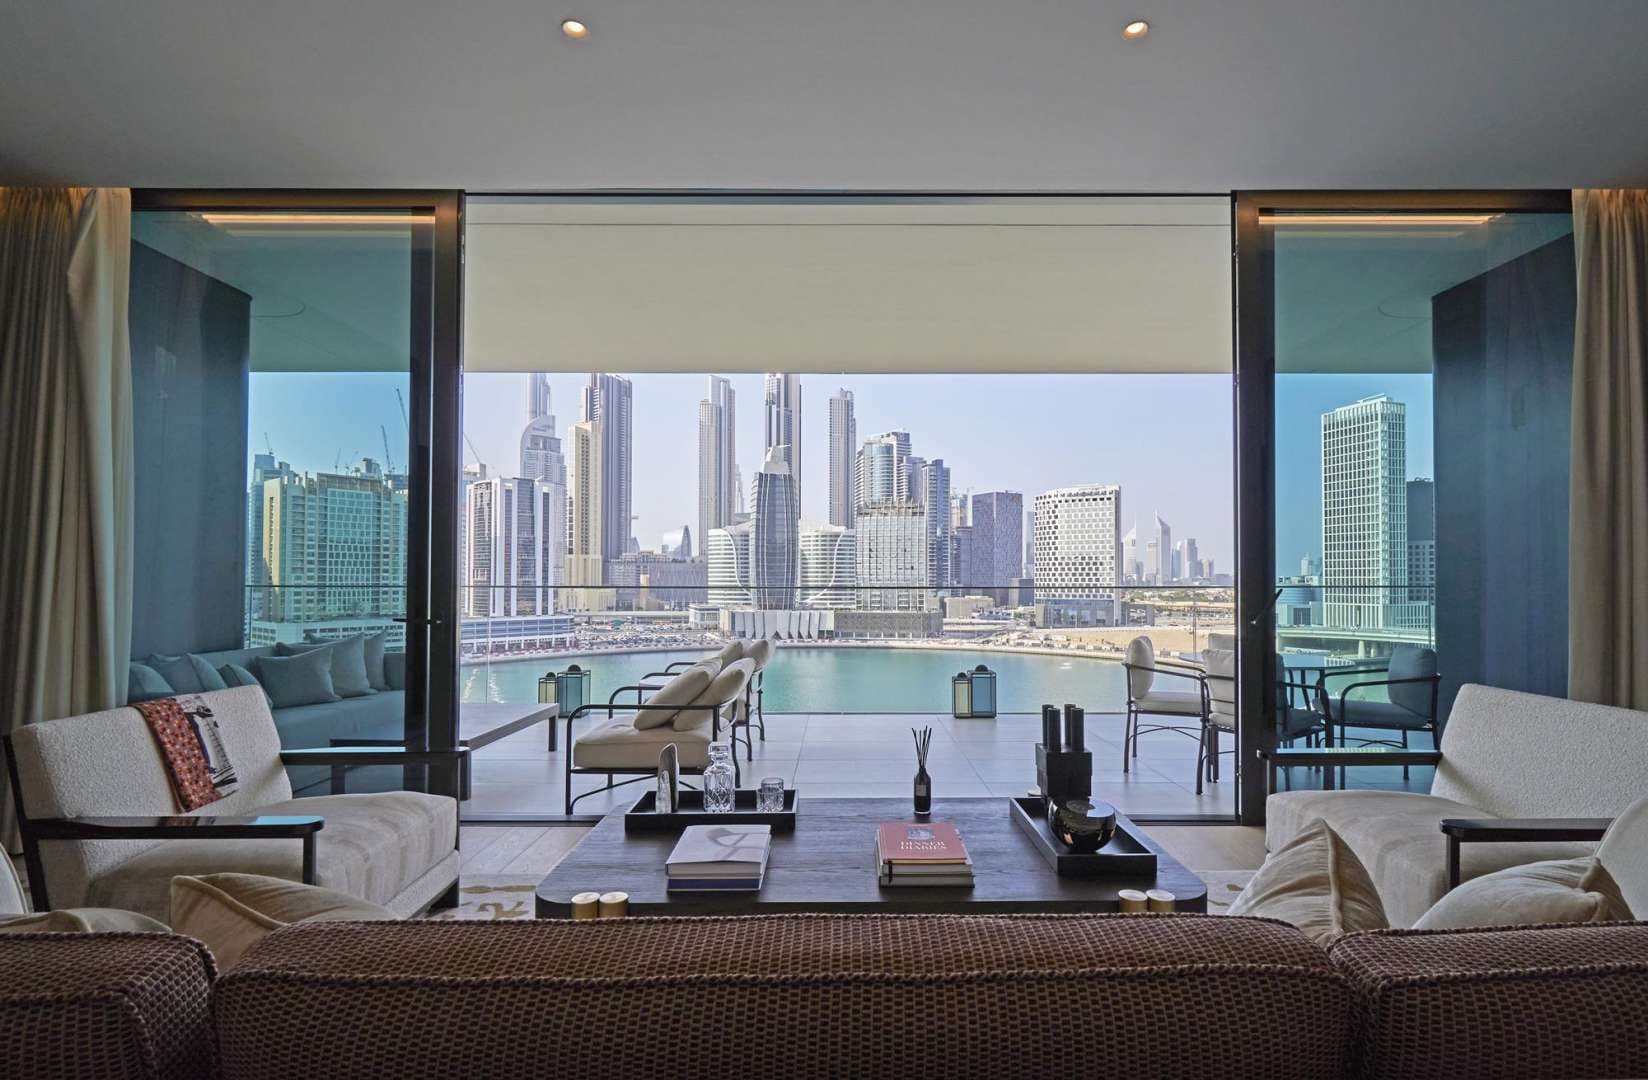 2 Bedroom Apartment For Sale The Residences Dorchester Collection Dubai Lp05253 1e56f07f838bb200.jpg